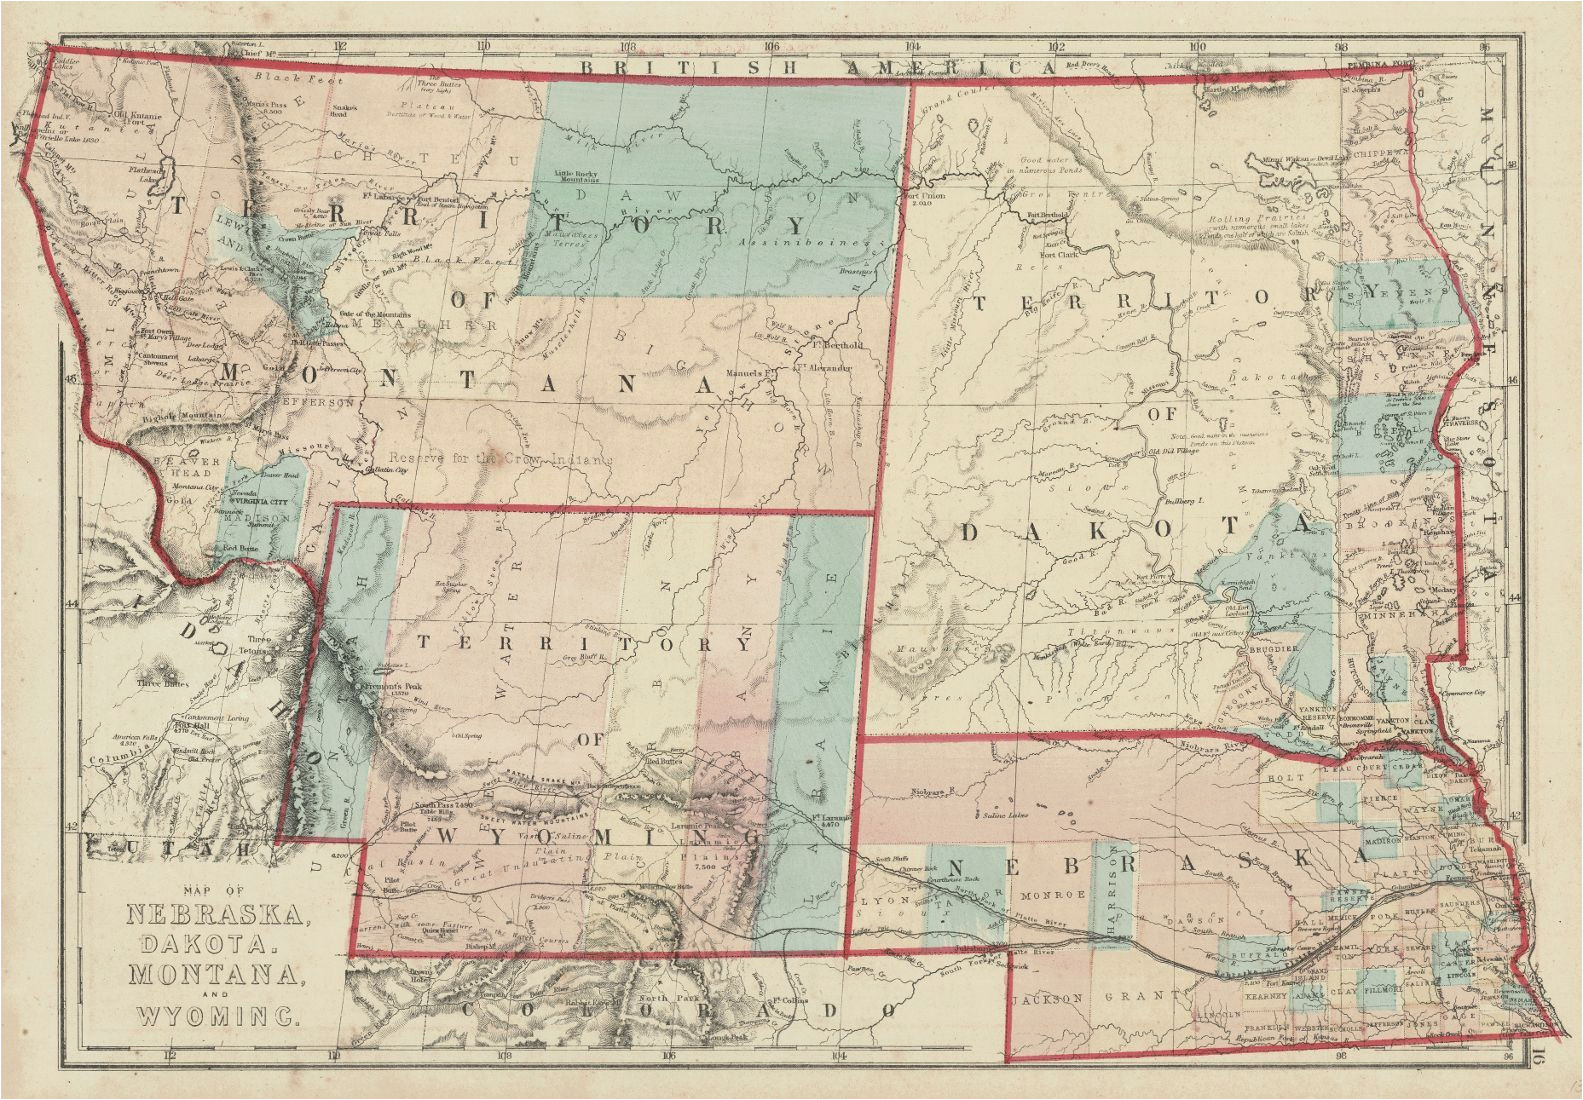 map of nebraska dakota montana and wyoming h h hardesty co